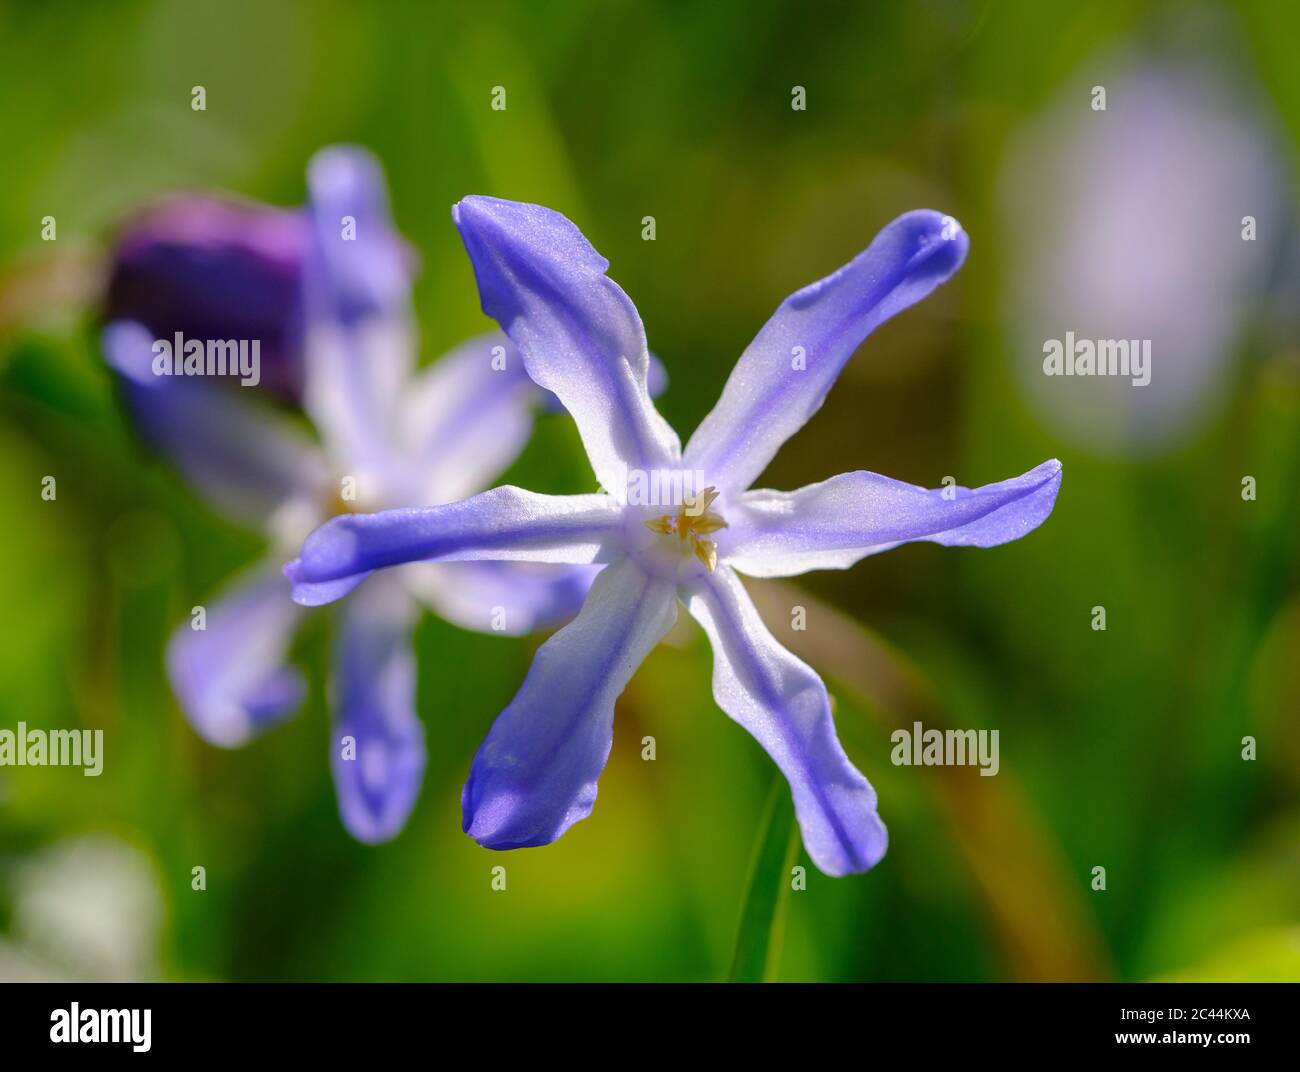 Kopf der lila blühenden Bossiers Glory-of-the-Snow (Scilla luciliae) Blume Stockfoto